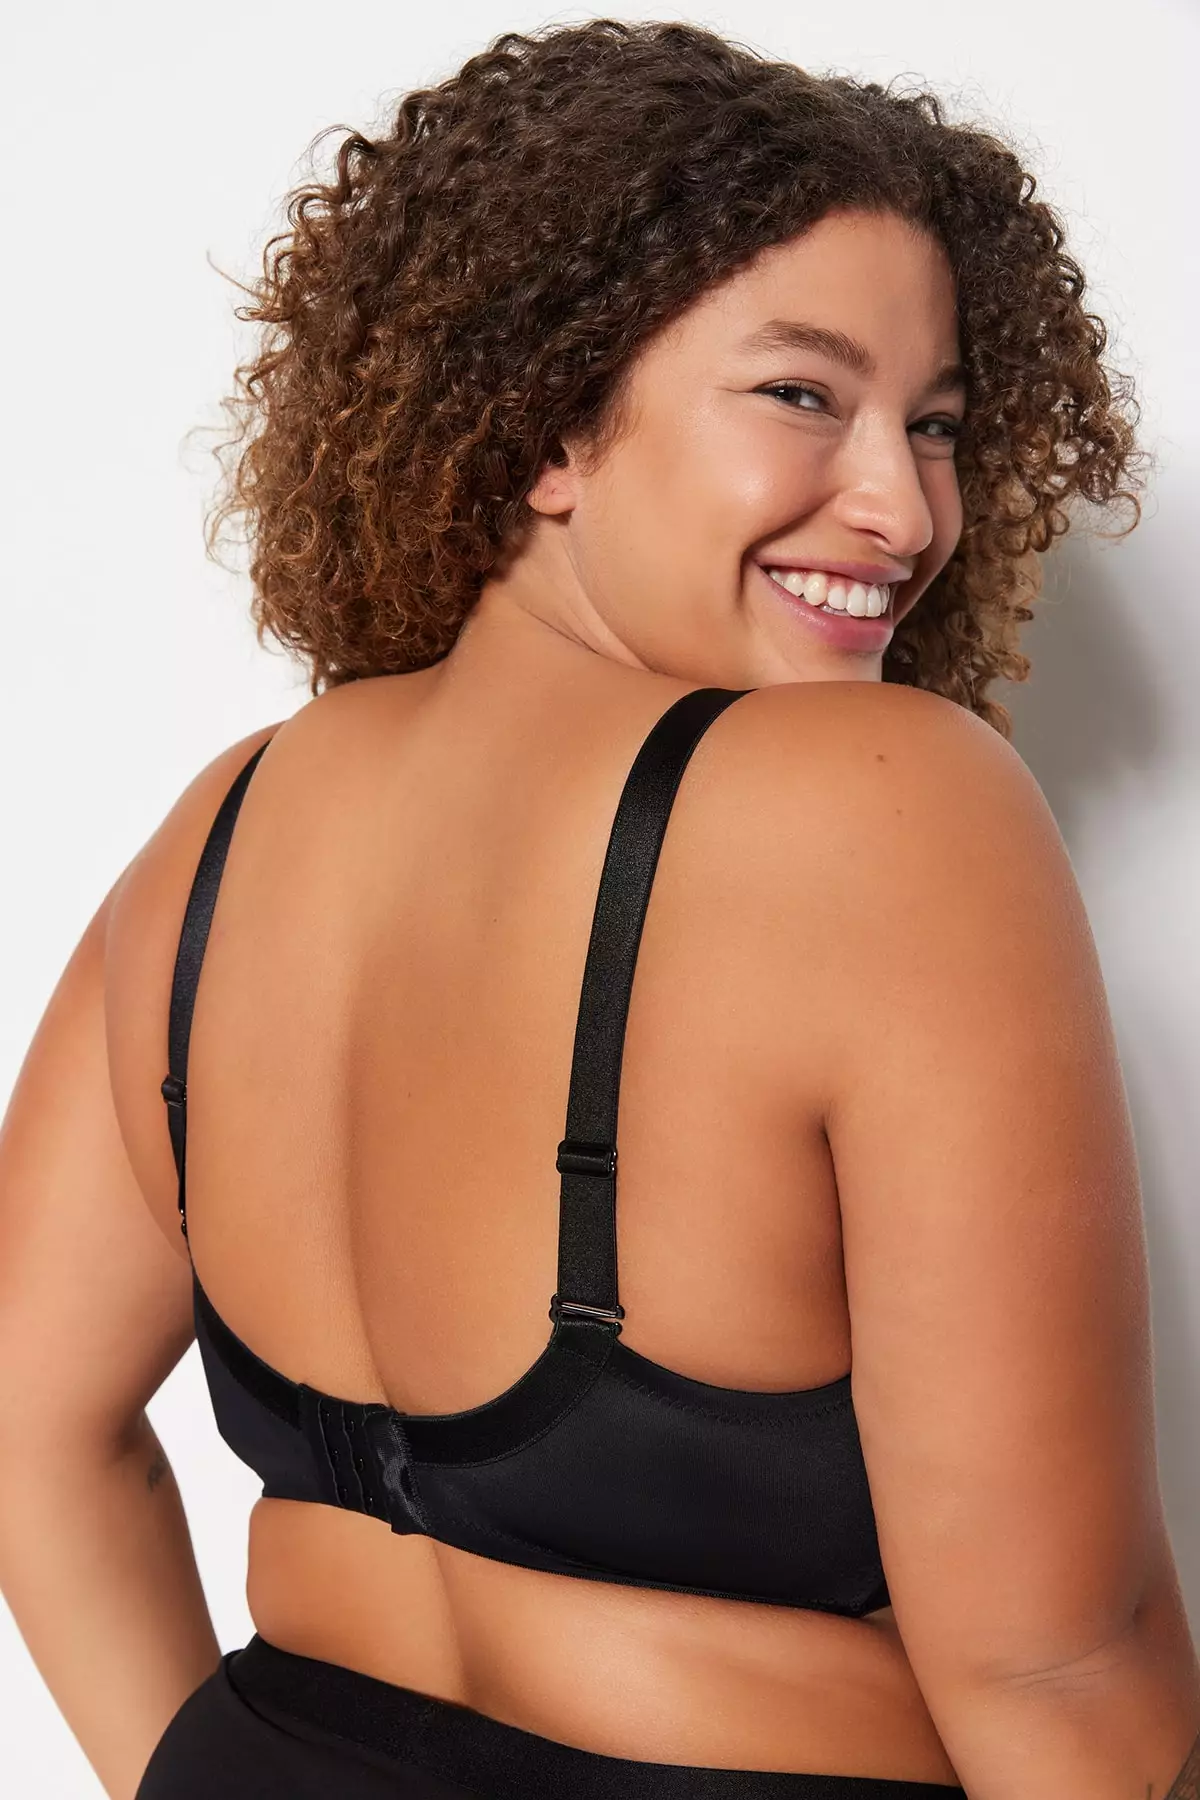 GapBody Women's 2-Pack Stretch Ribbed Tagless & Seamless Comfort Bras (True  Black/Nude, XXL)